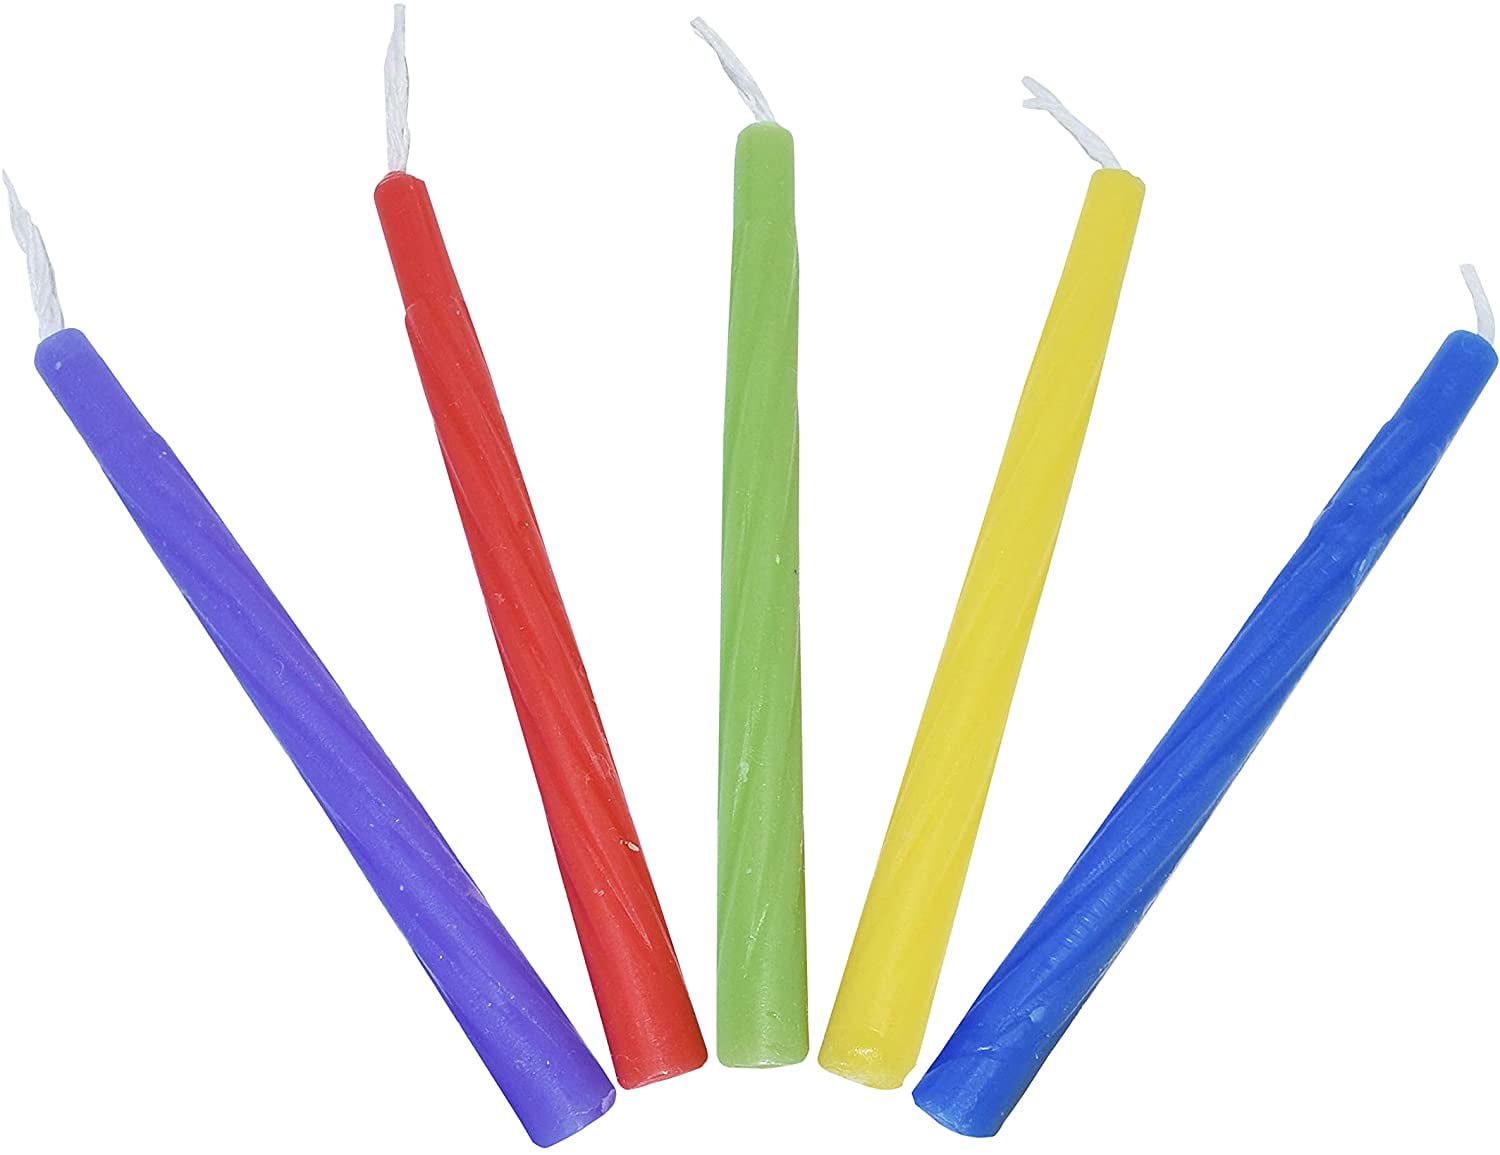 Ner Mitzvah Hanukkah Candles - Multicolor (44 Count)